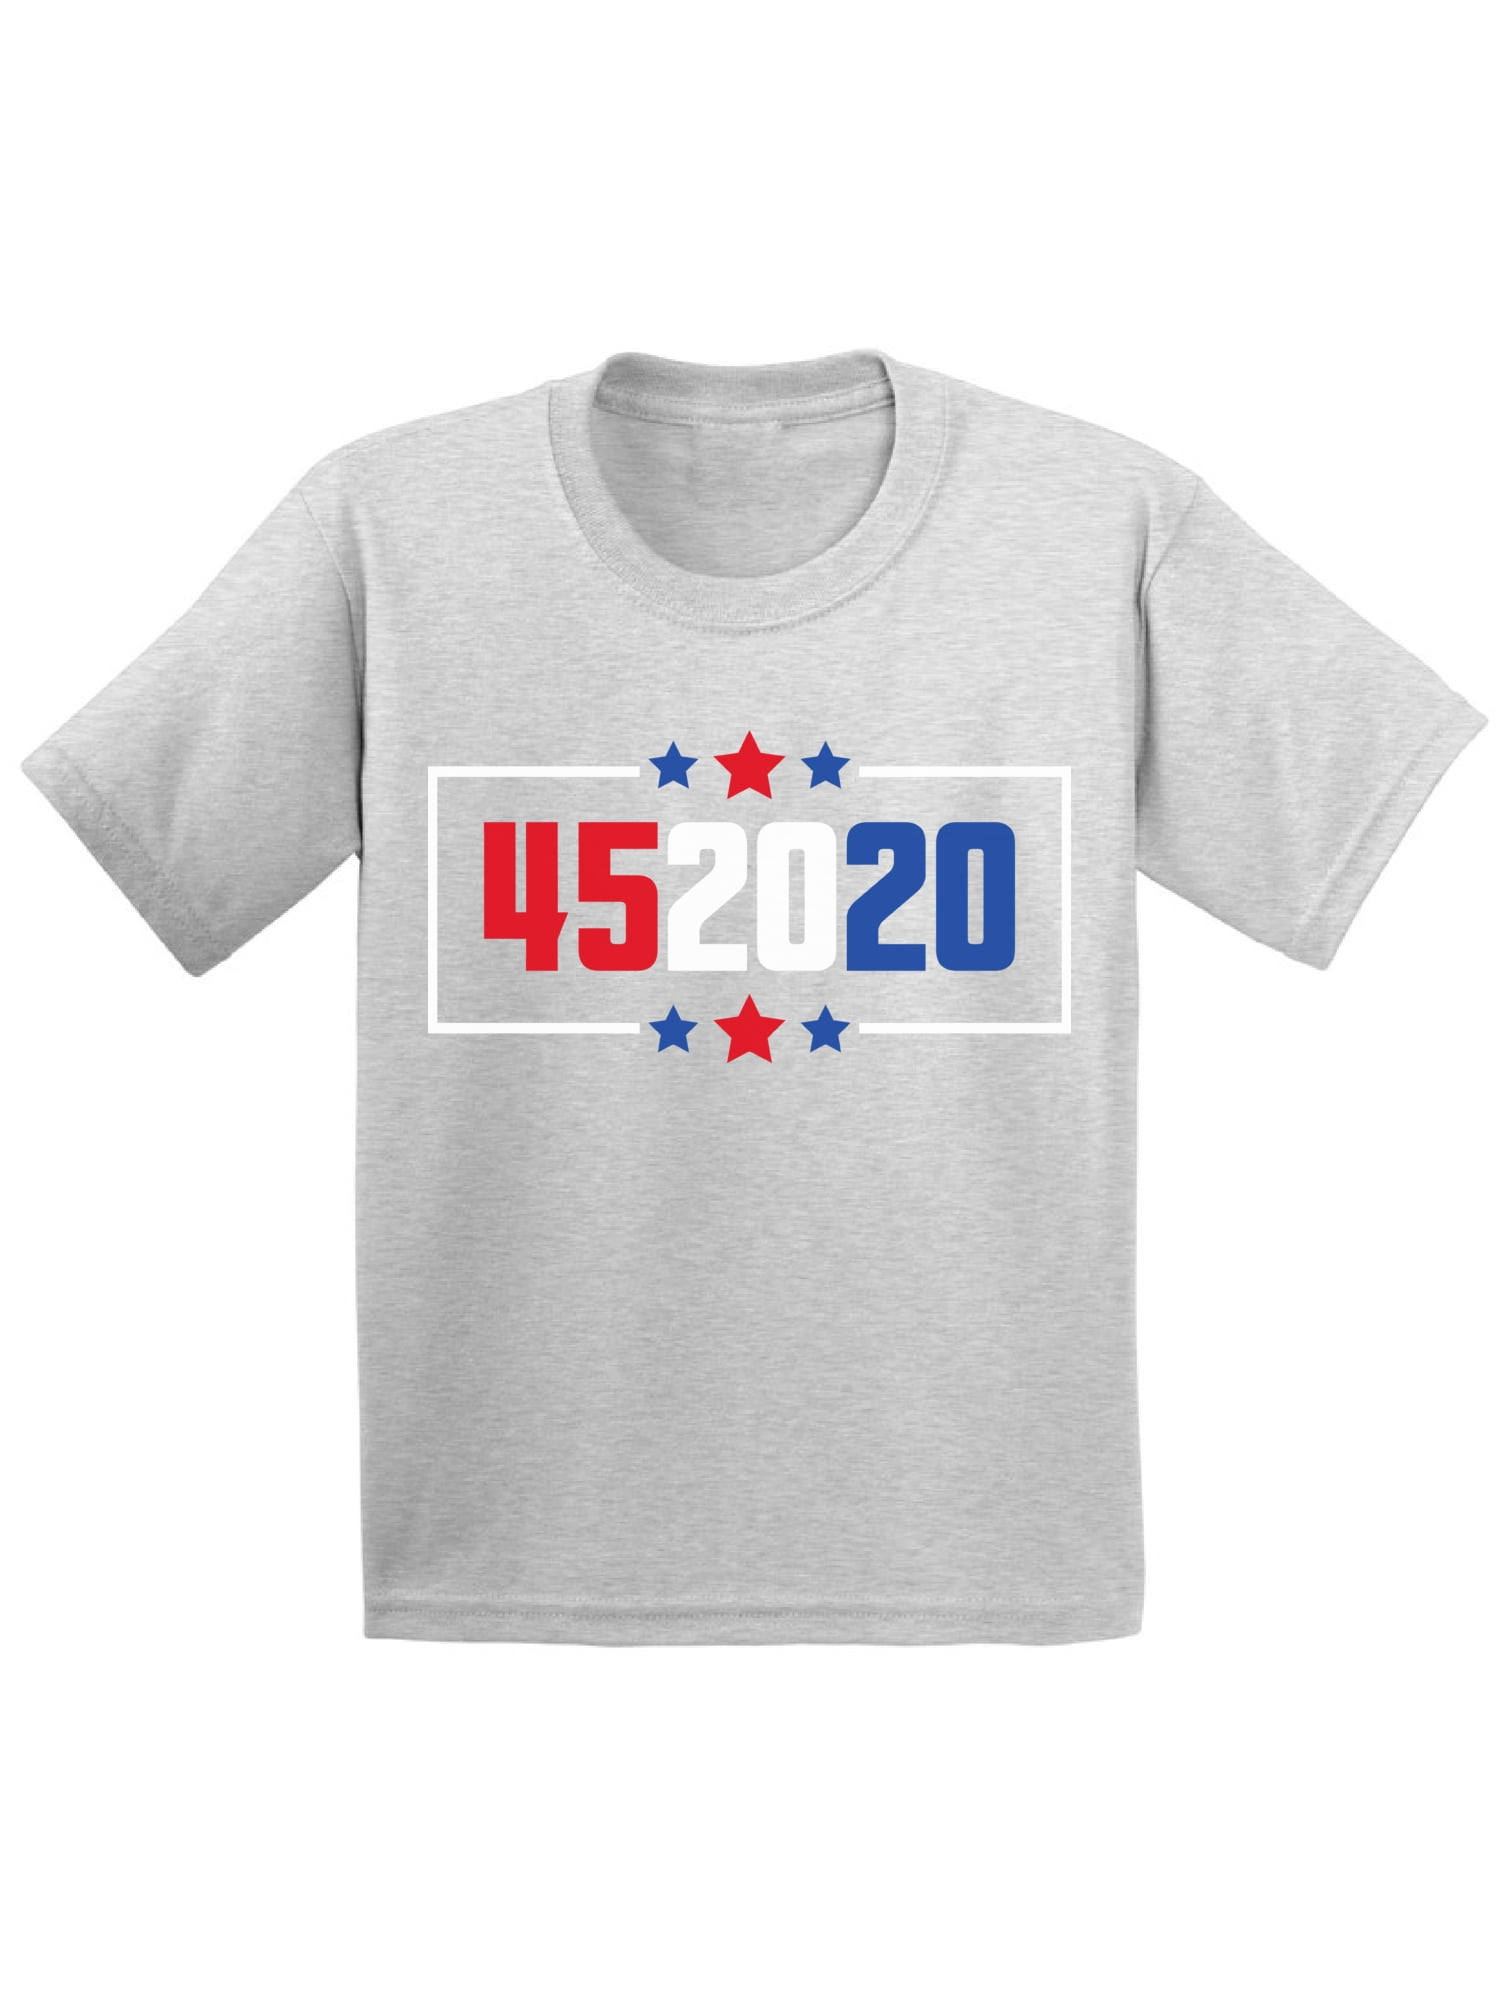 Awkward Styles Political Theme Youth Shirt Trump 45 2020 T-Shirt USA Election Tee Shirts Republican Shirts Support Trump T-Shirt Donald Trump Gifts for Children - Walmart.com